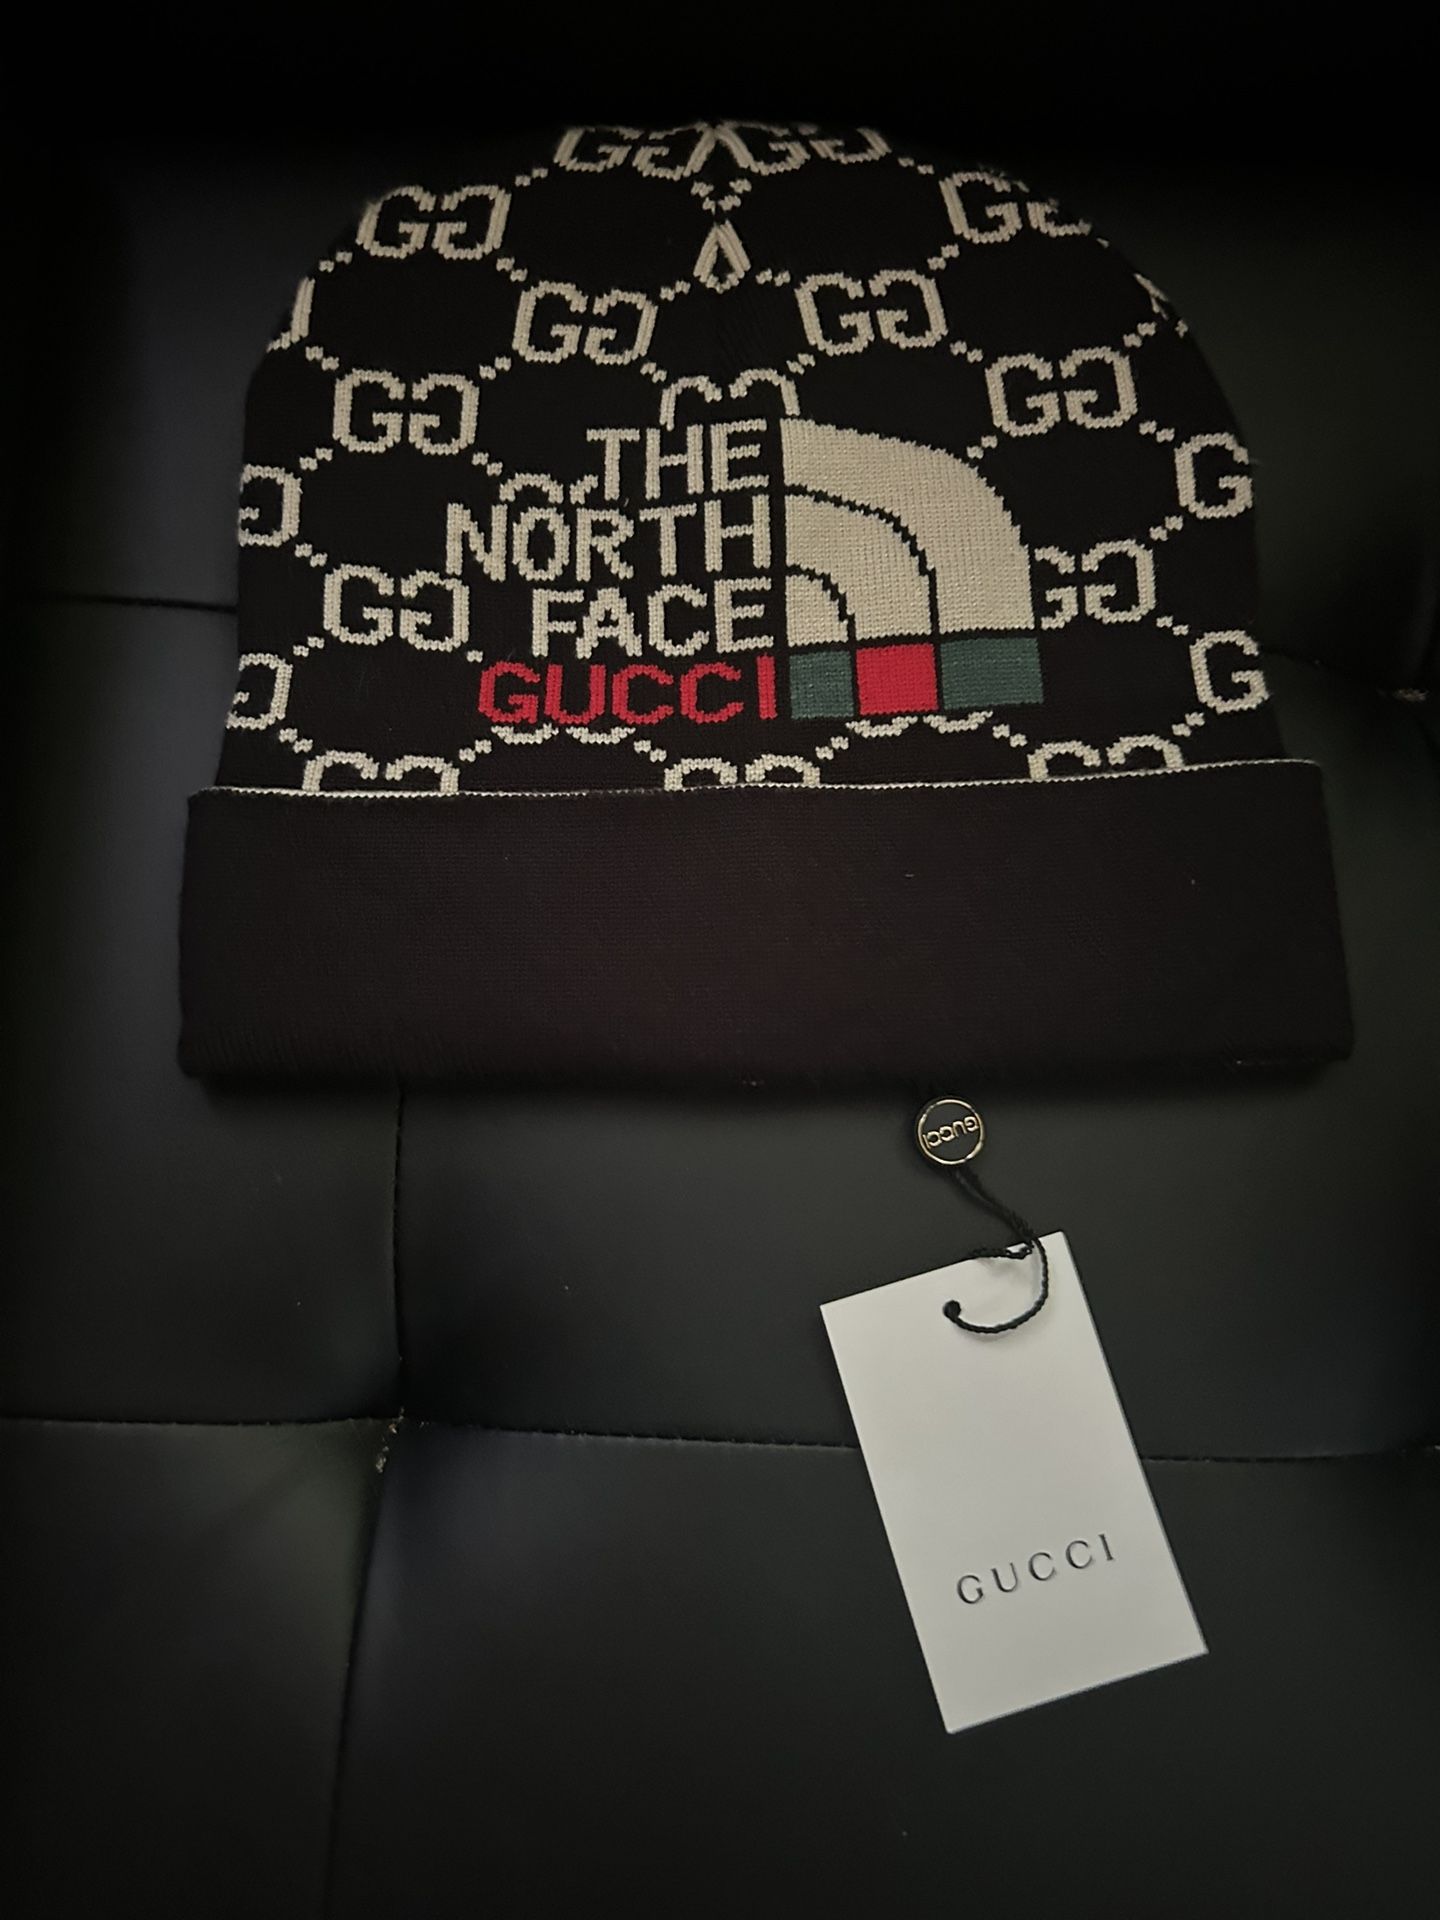 Gucci X North face Calab 